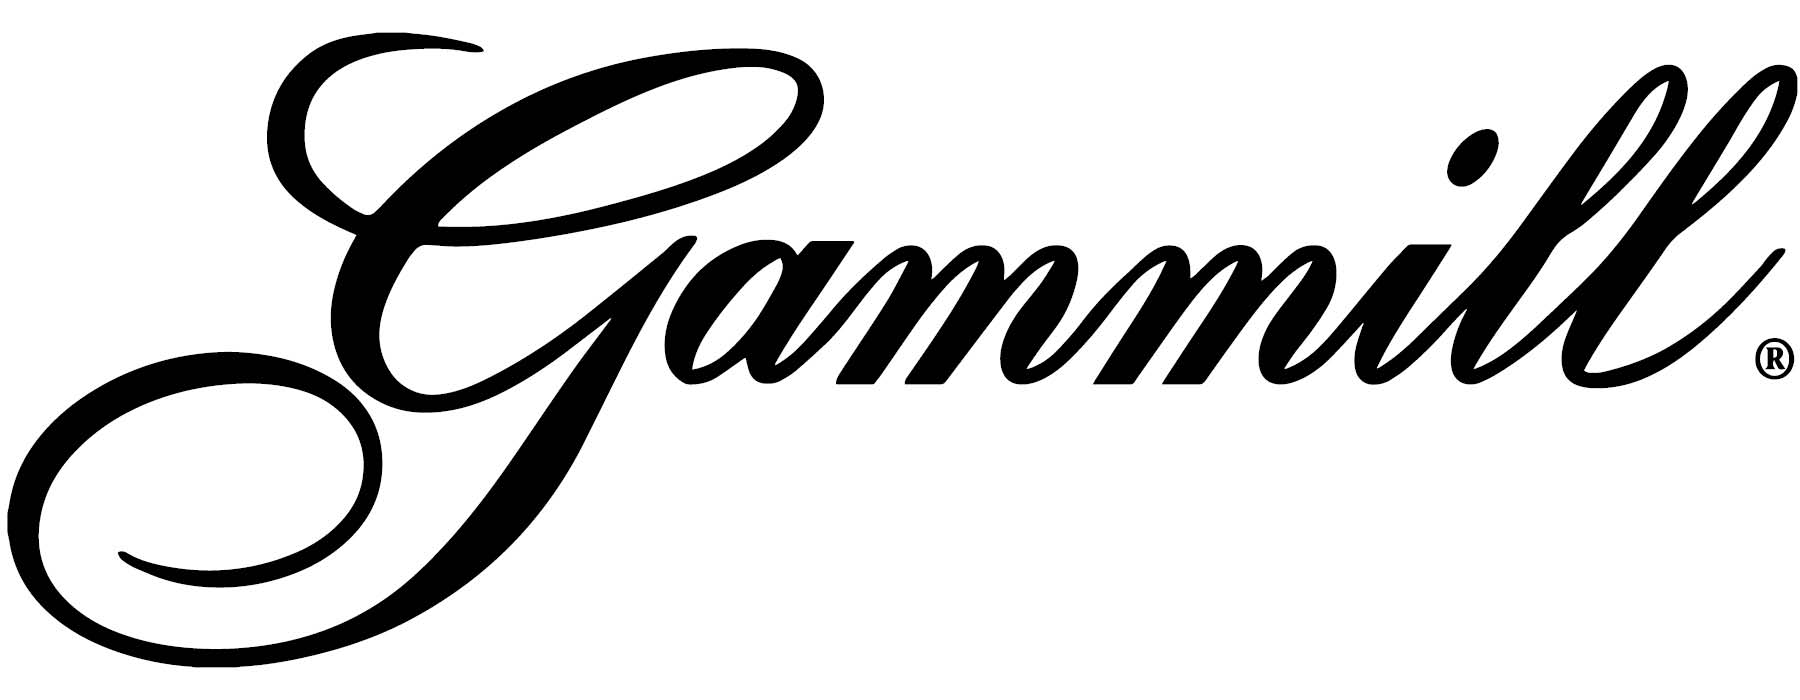 Gammill Logo (1)